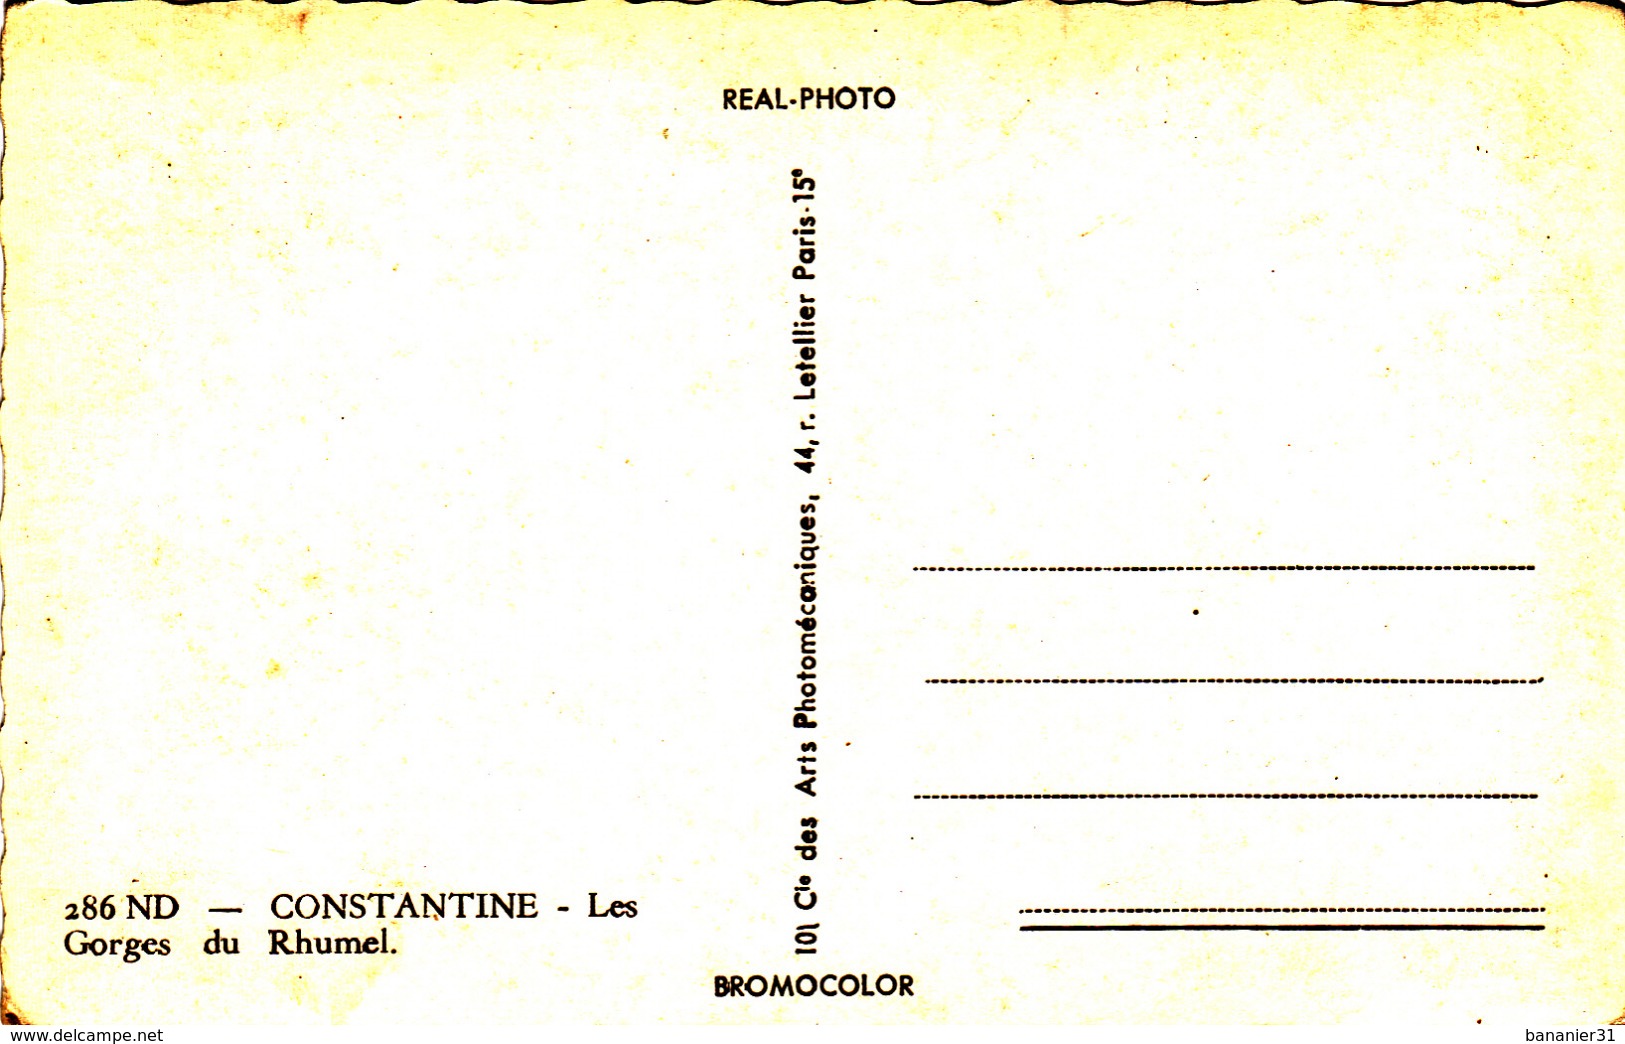 CPSM ALGERIE - CONSTANTINE : LOT de 5 cartes postales dont l'aqueduc Romain @ Edition CAP